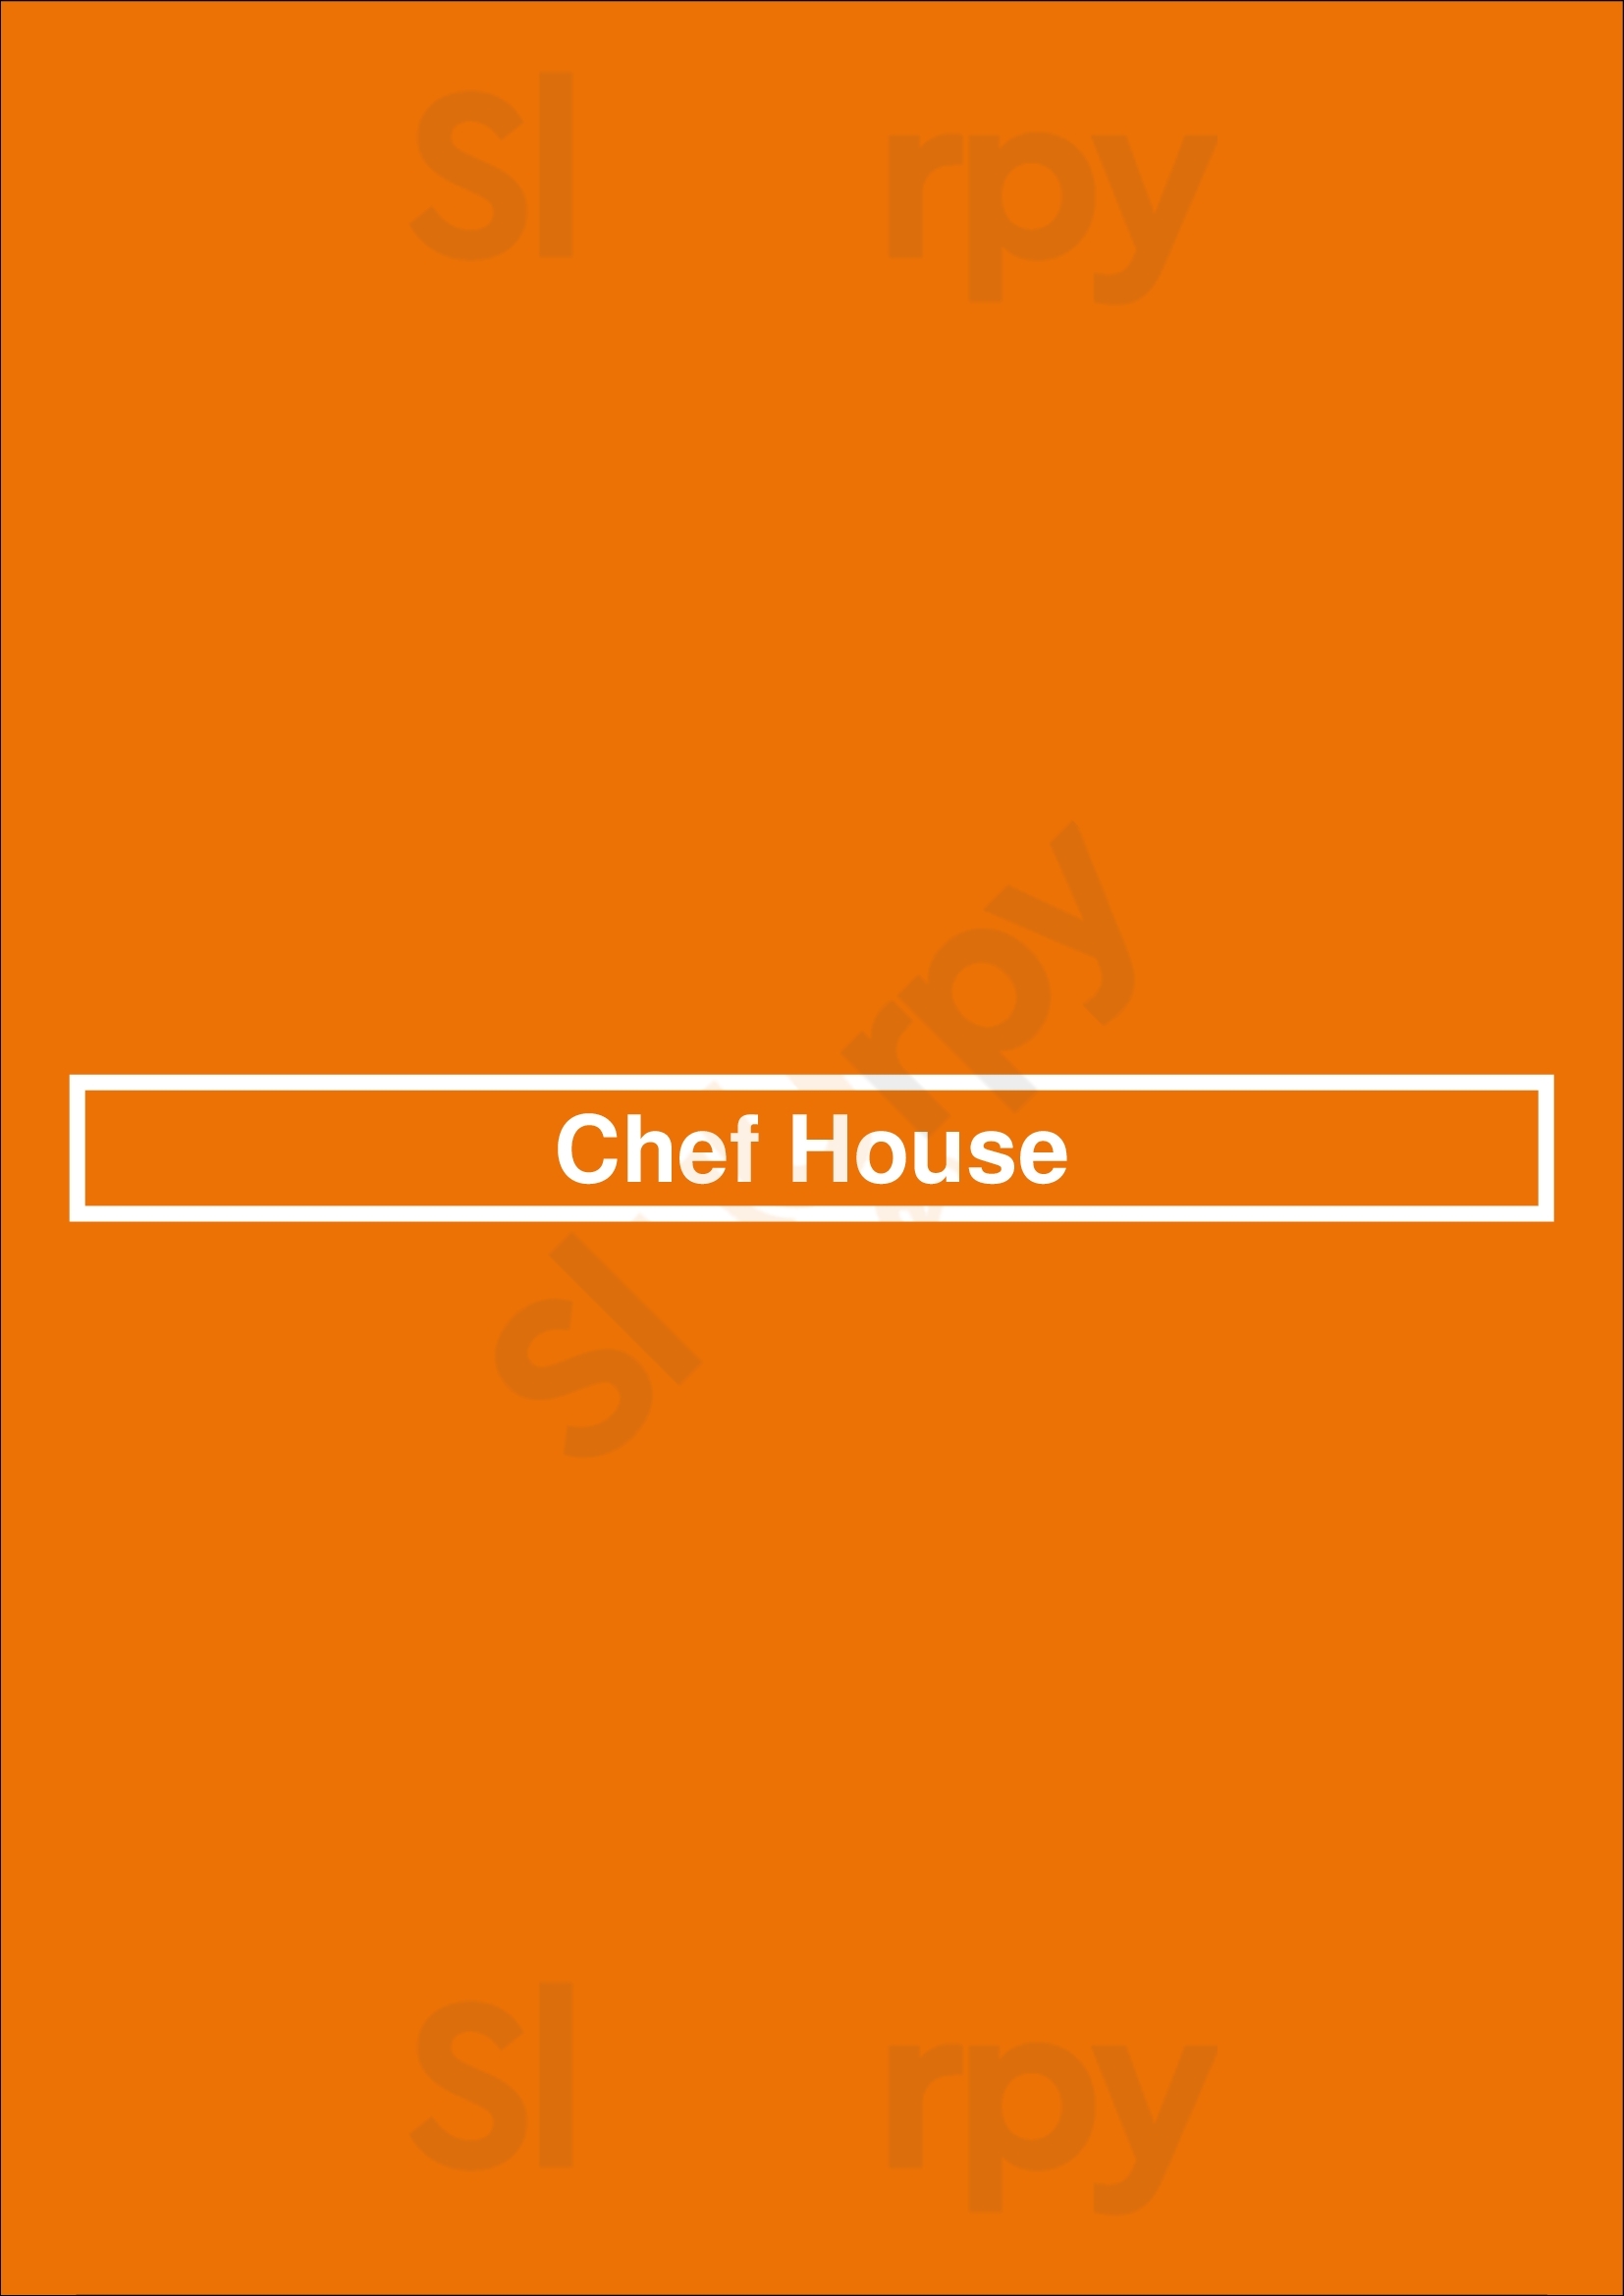 Chef House Edmonton Menu - 1